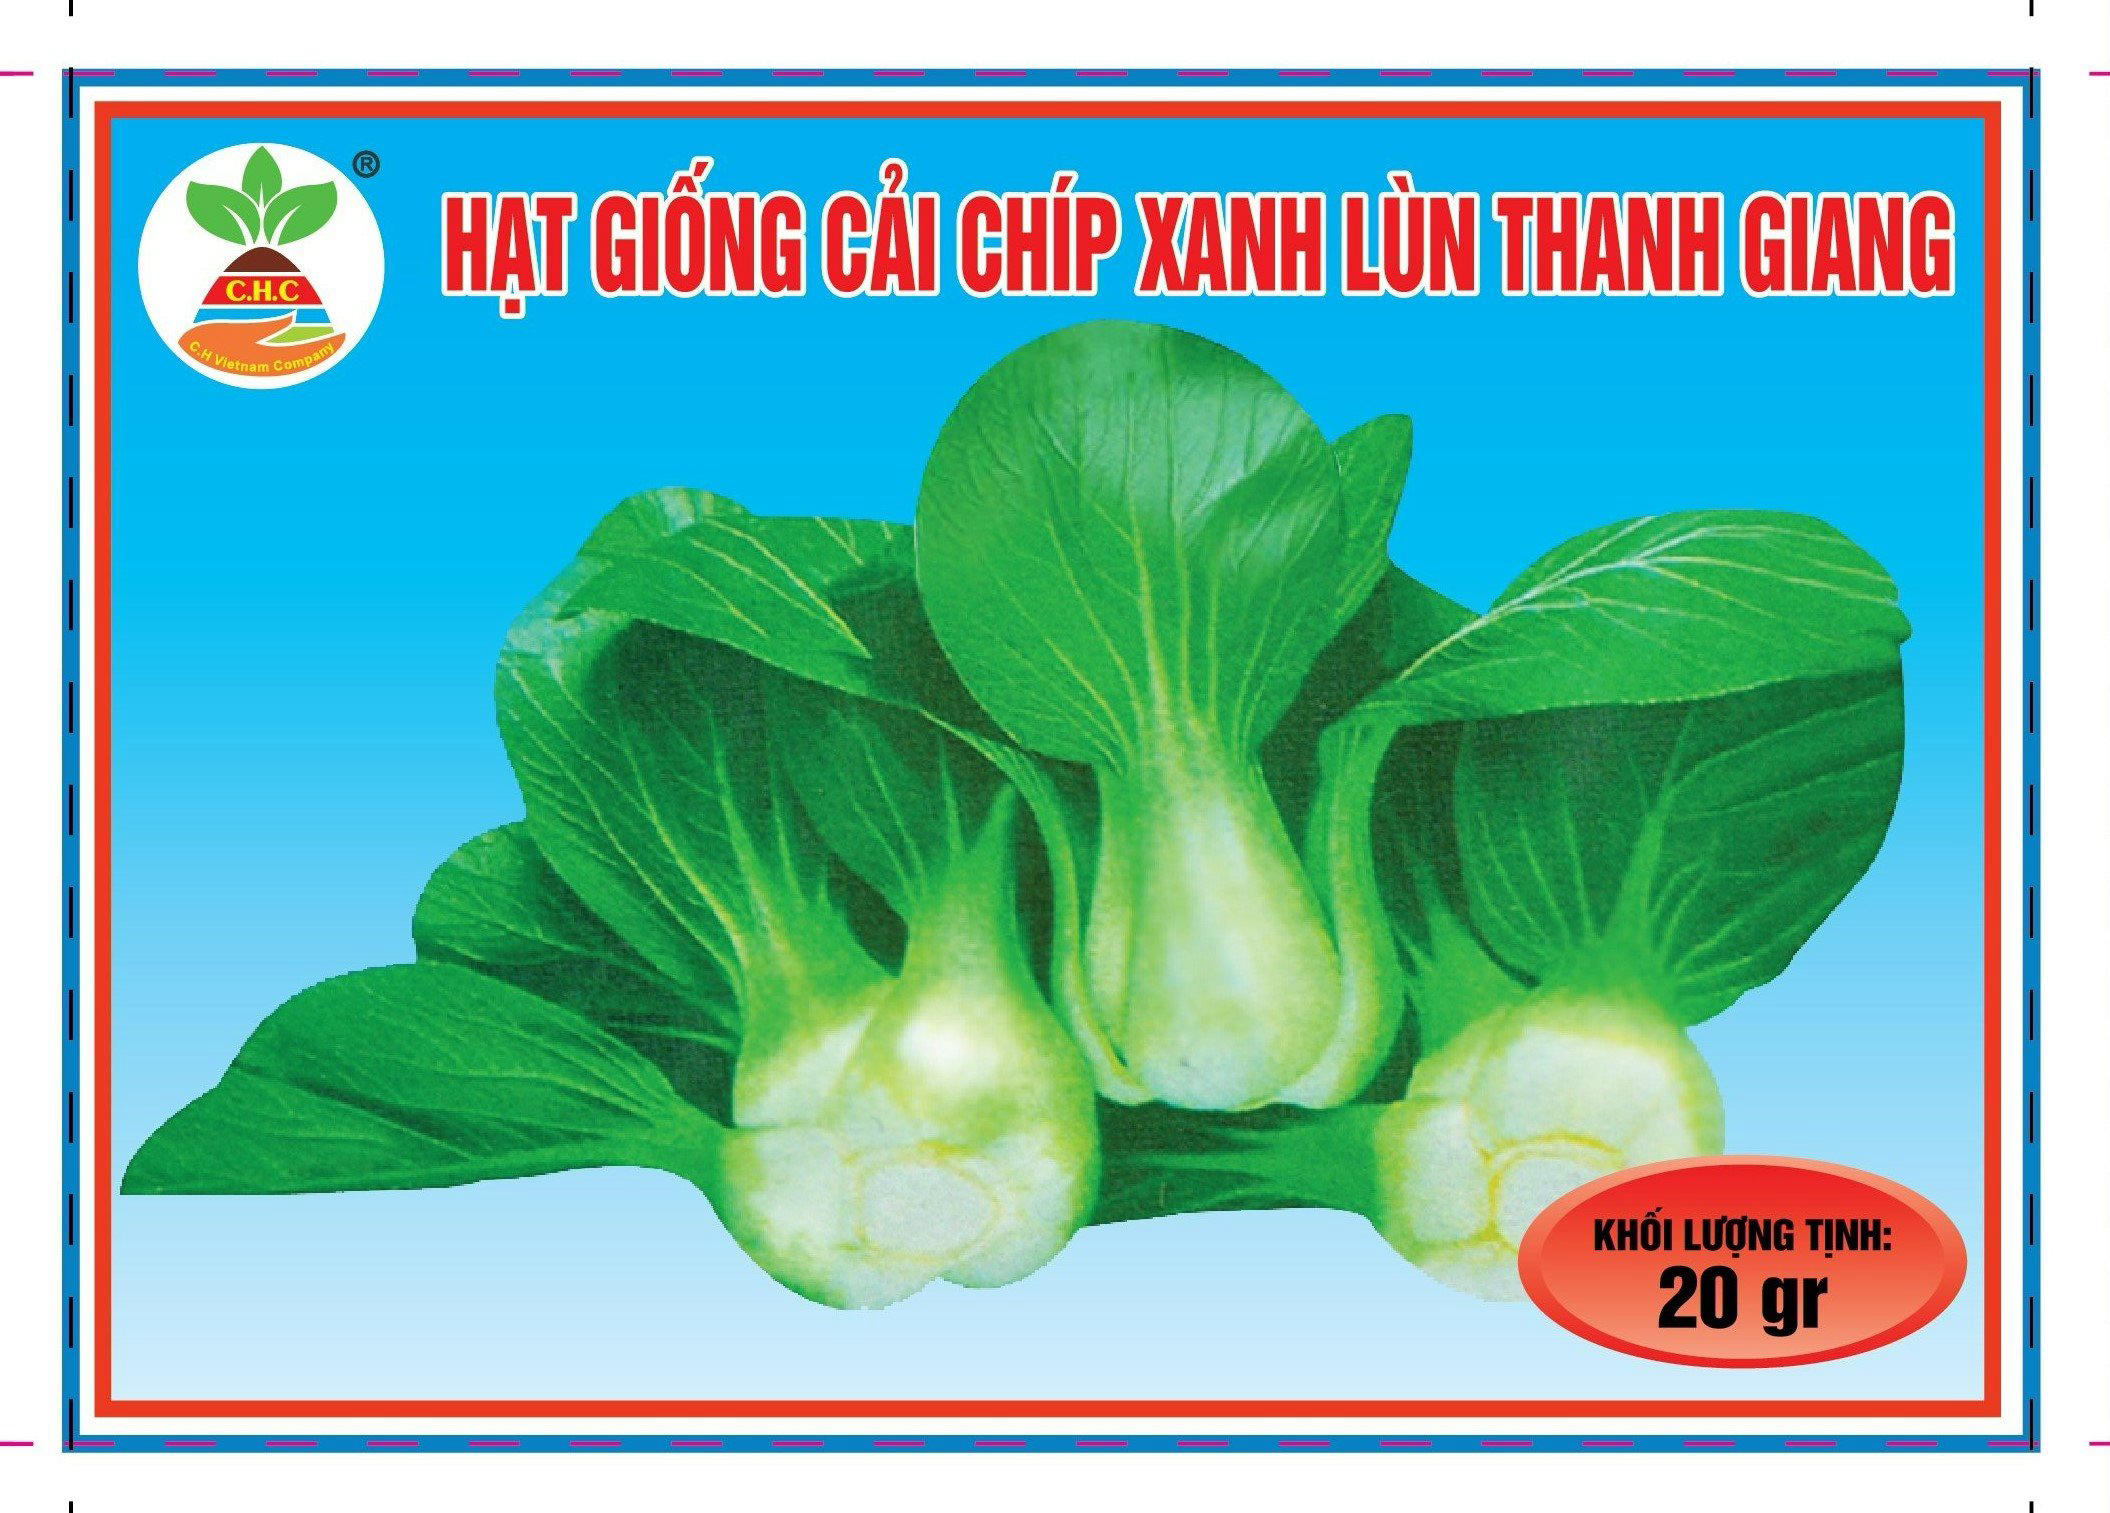 Thanh Giang dwarf bok choy seeds